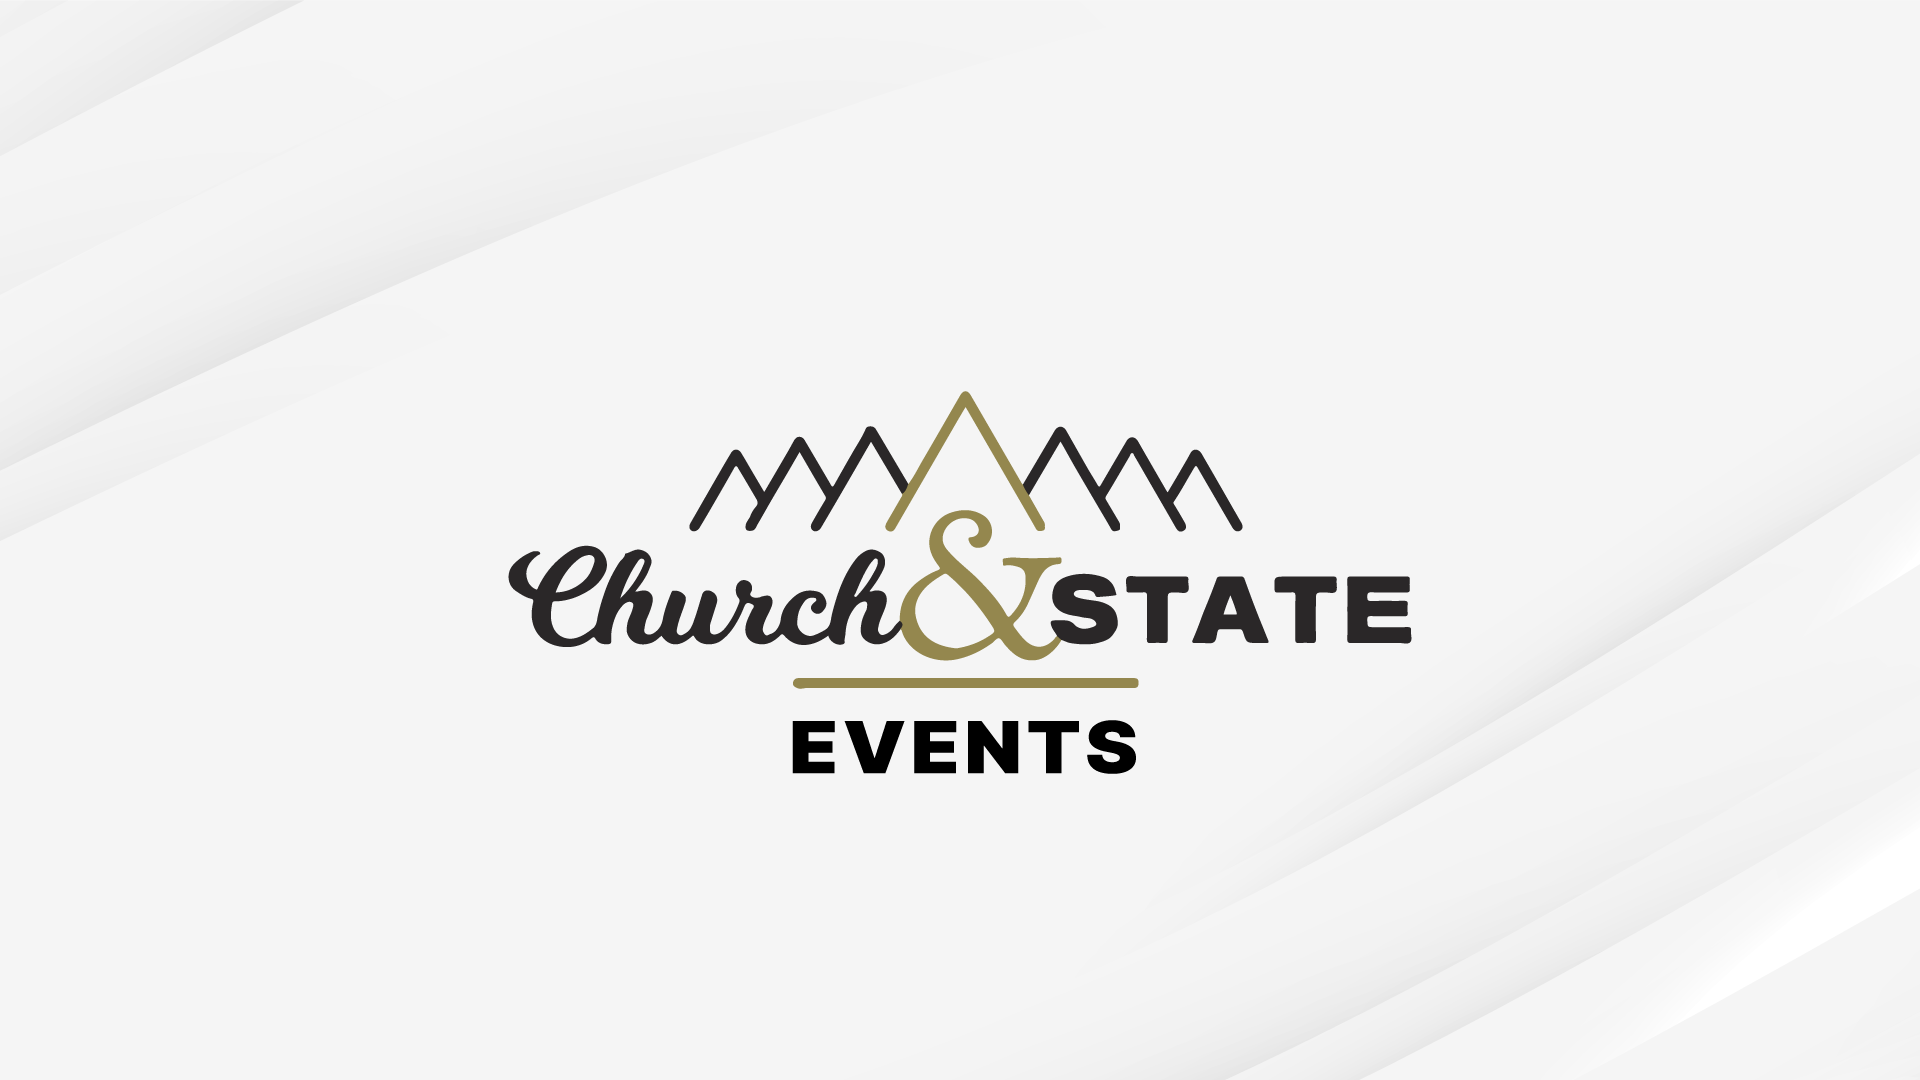 Church and State Brisbane Summit, 2023